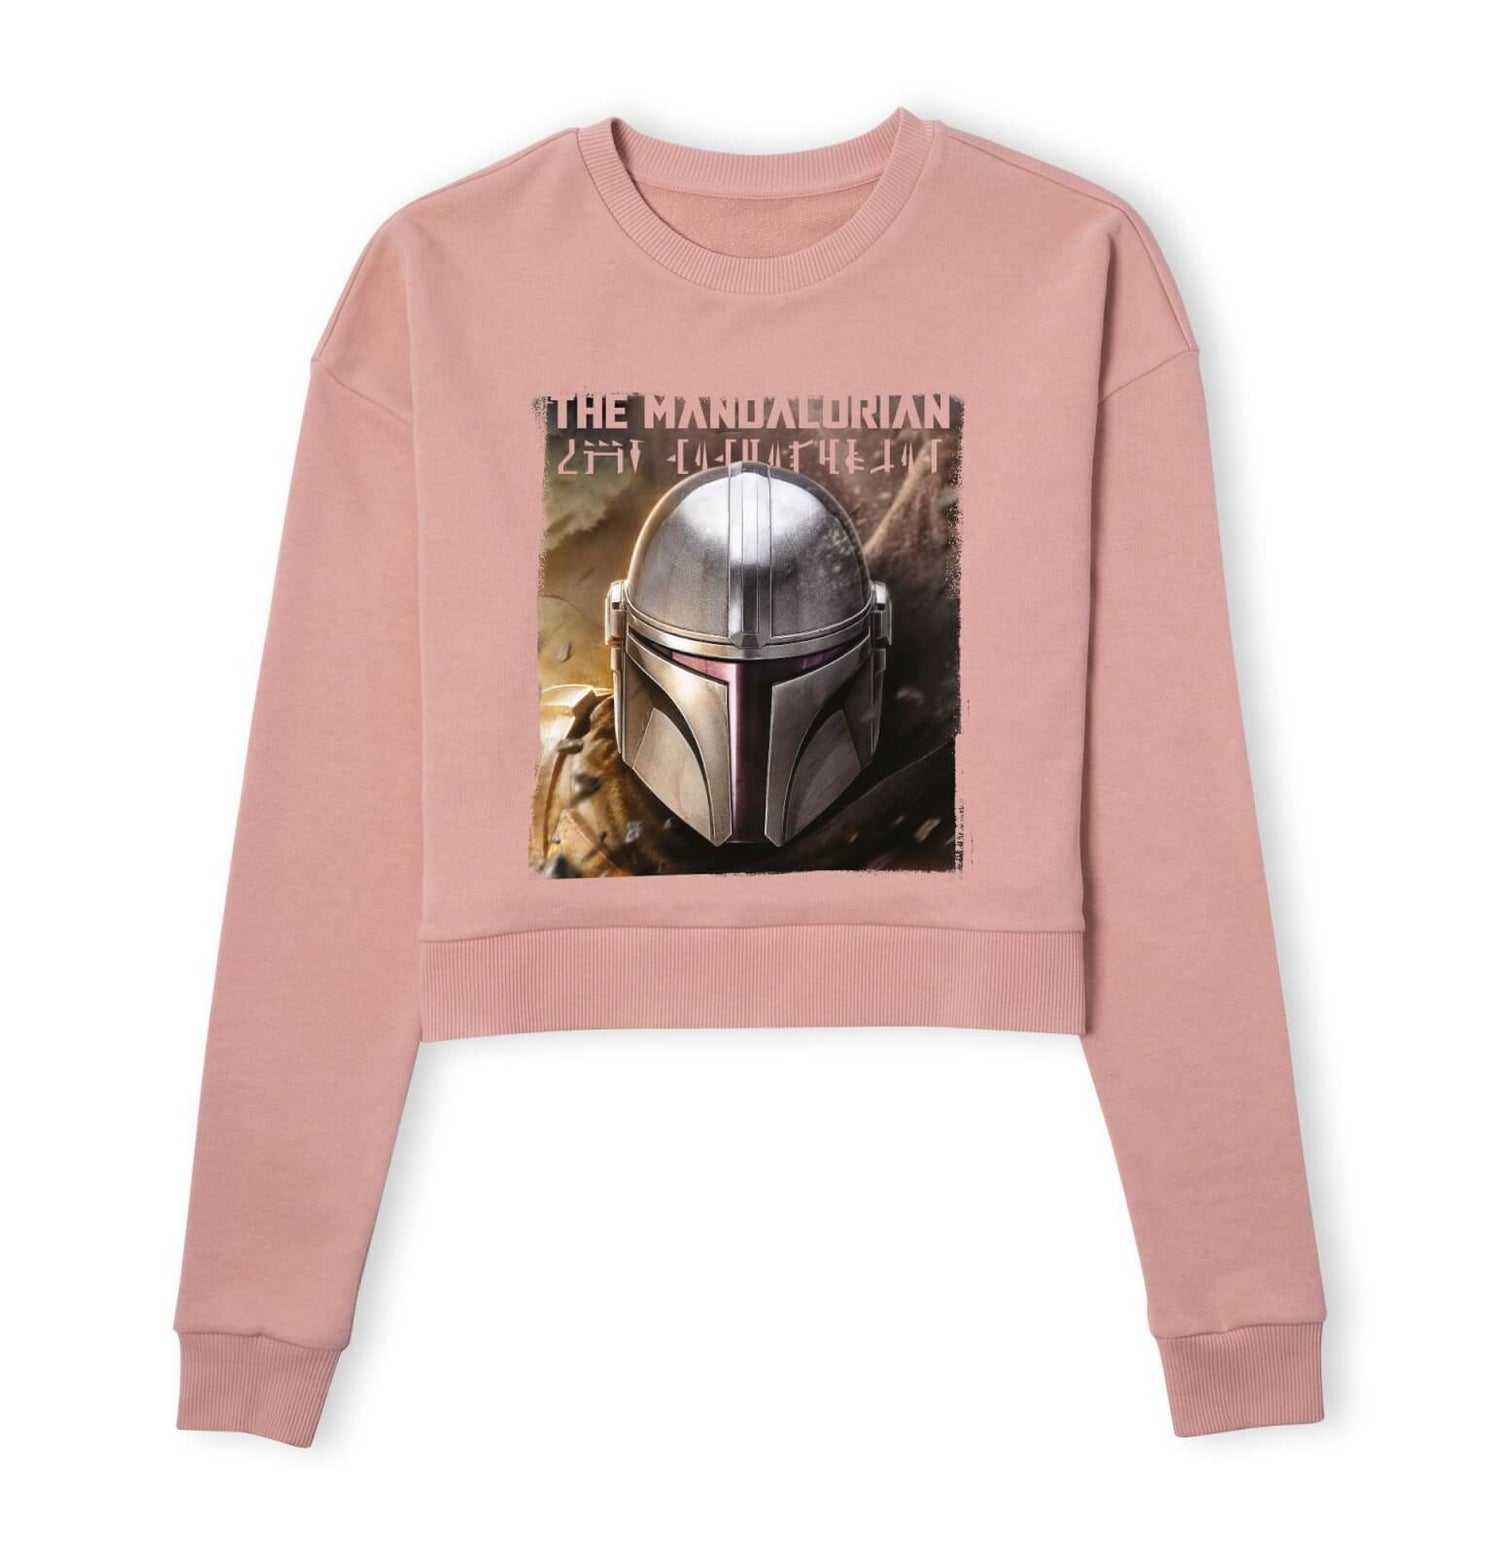 Star Wars The Mandalorian Focus Women's Cropped Sweatshirt - Dusty Pink - L